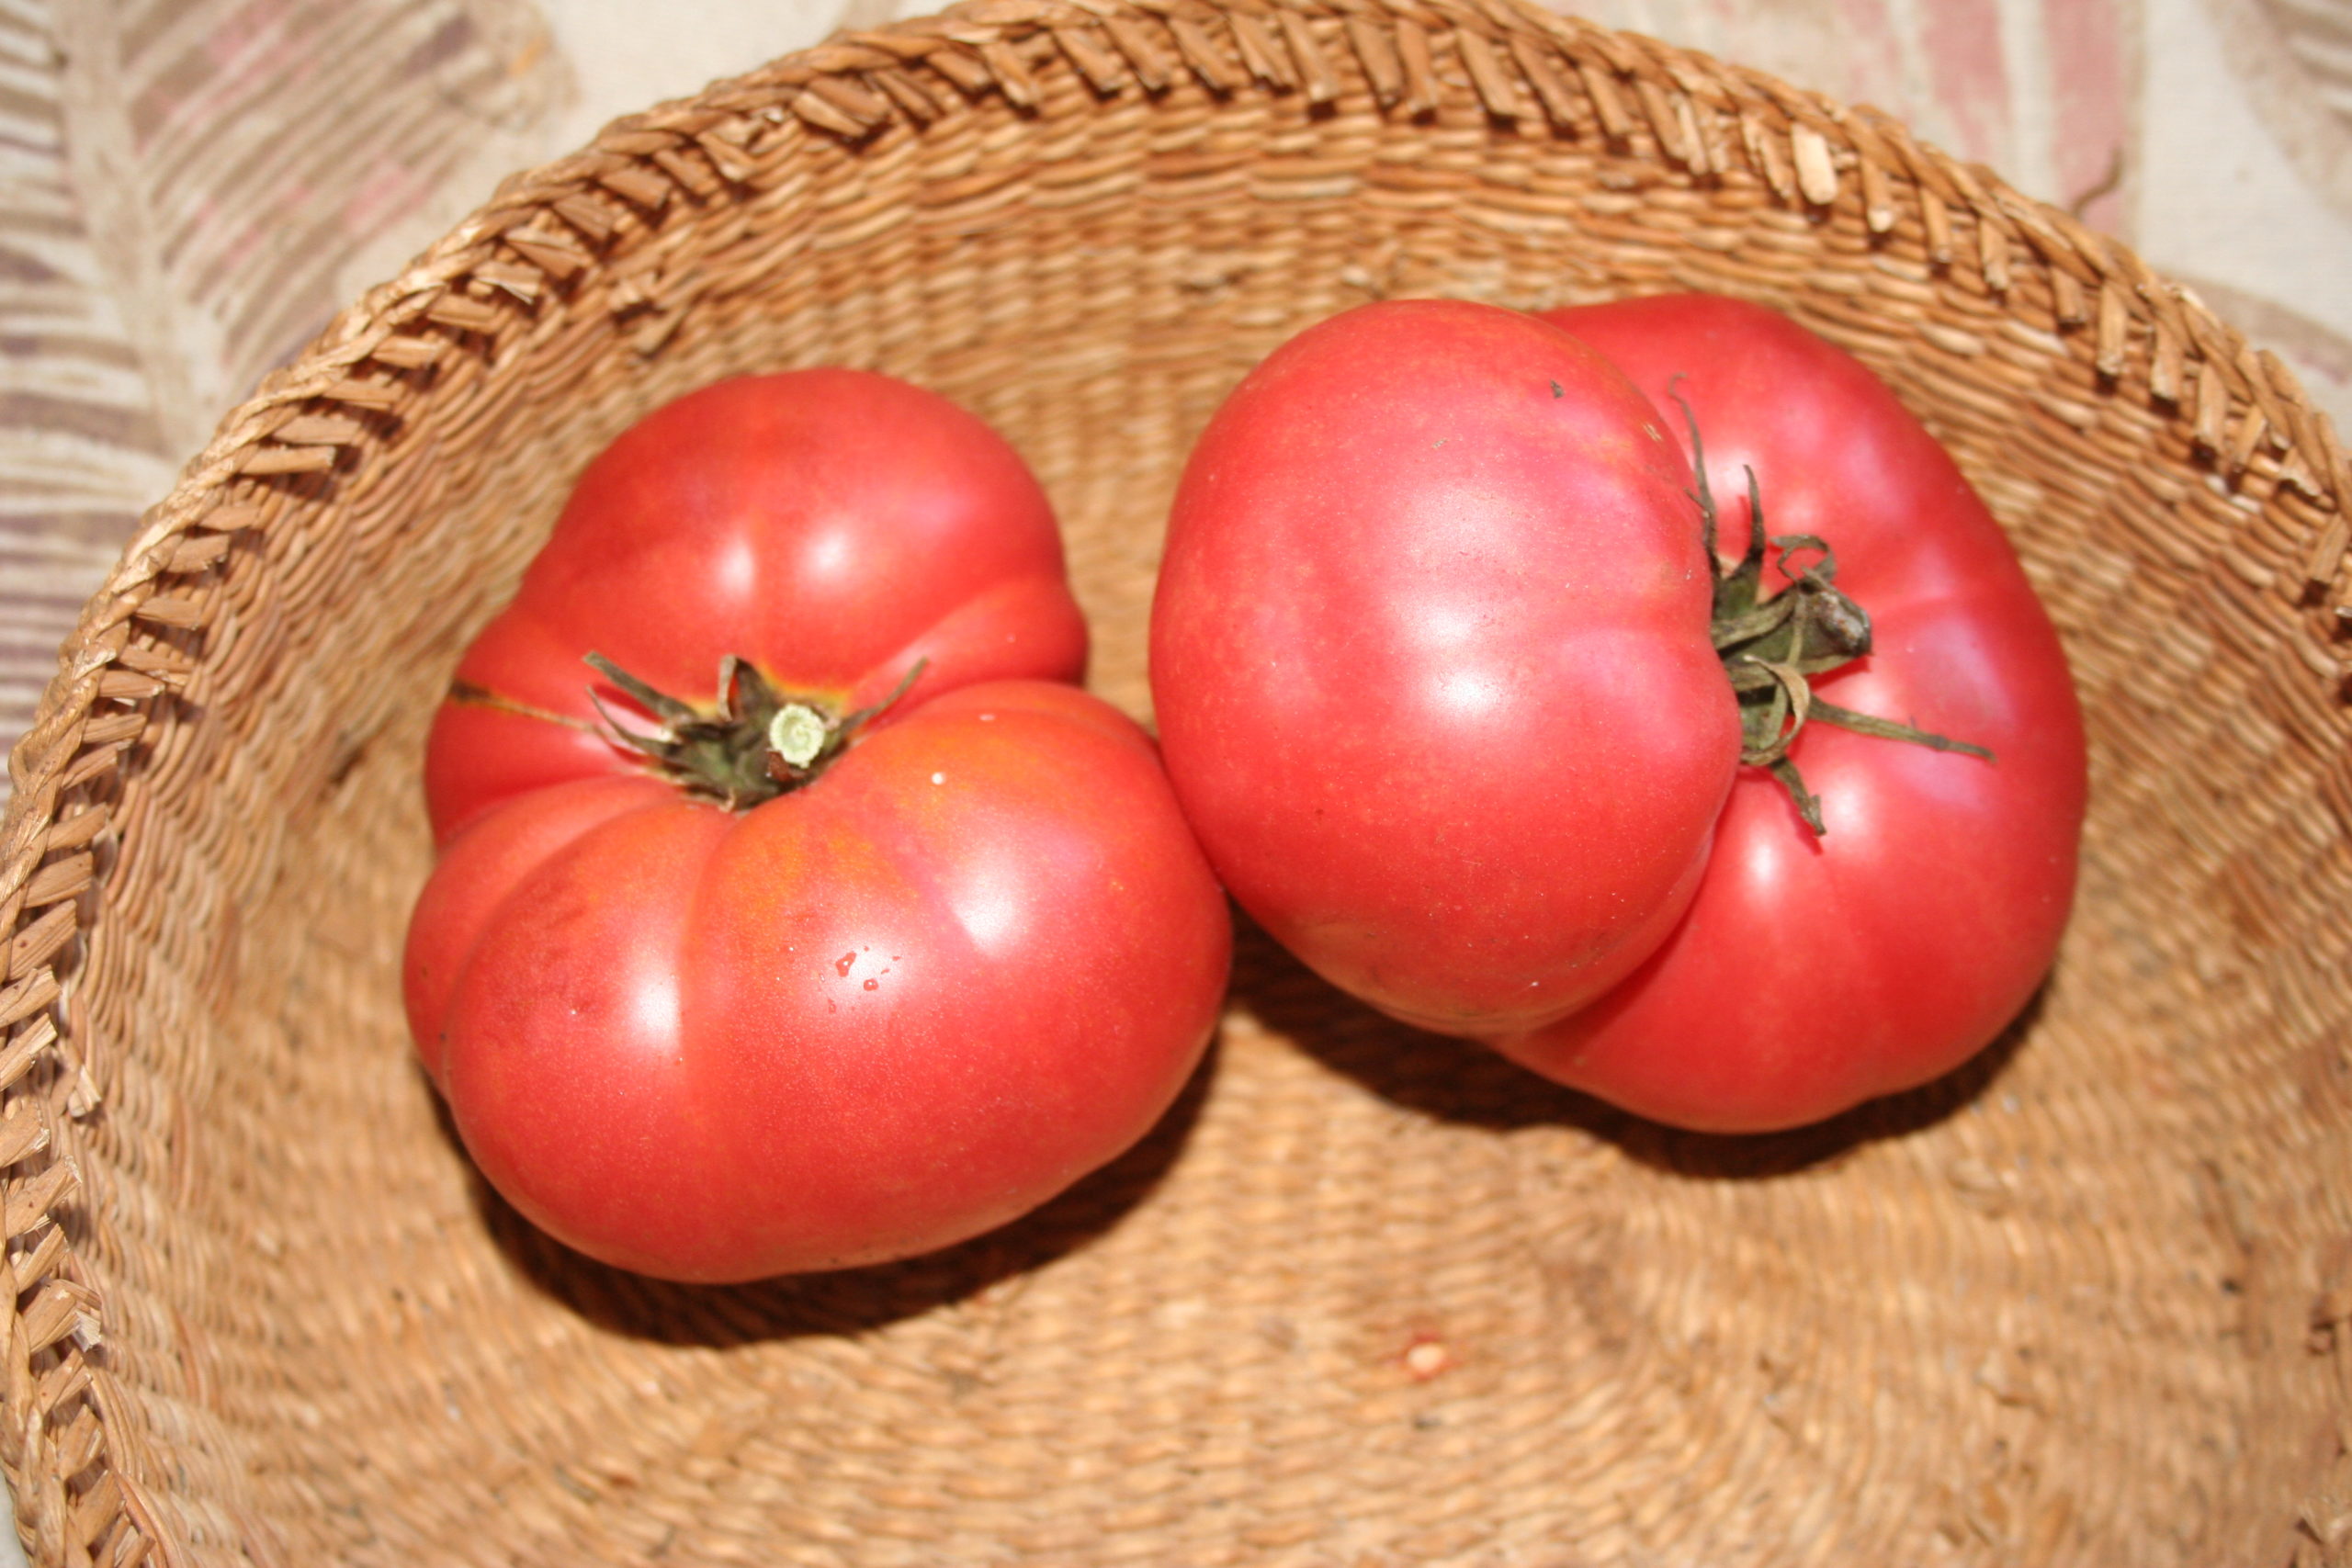 Amish Gold Slicer Tomato Seeds For Sale At